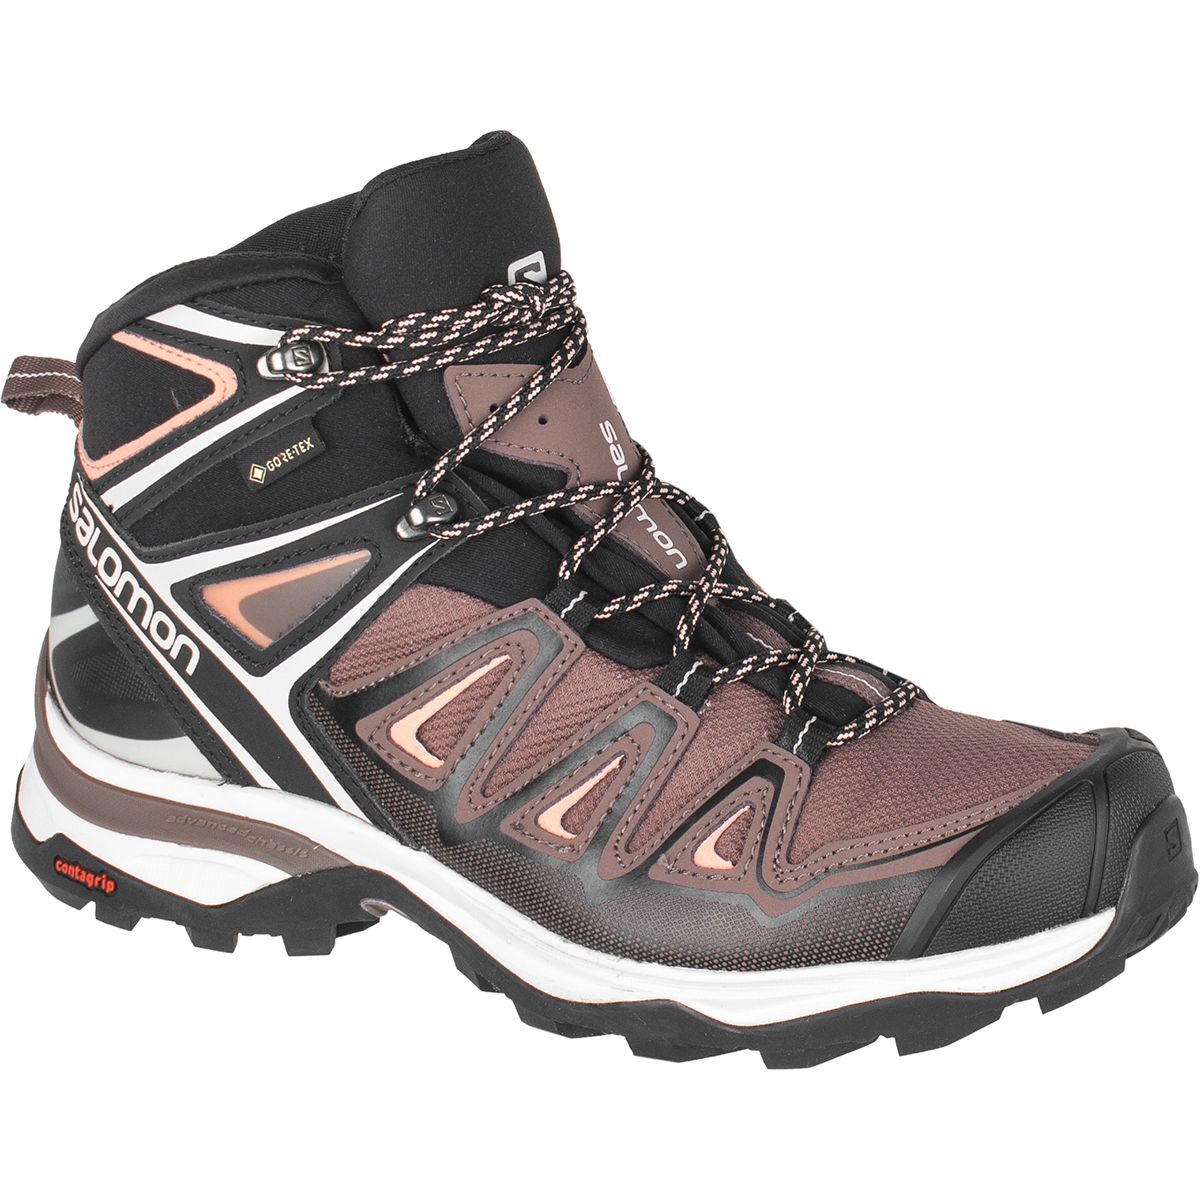 Salomon X Ultra 3 Mid GTX Hiking Boot - Women's - Footwear